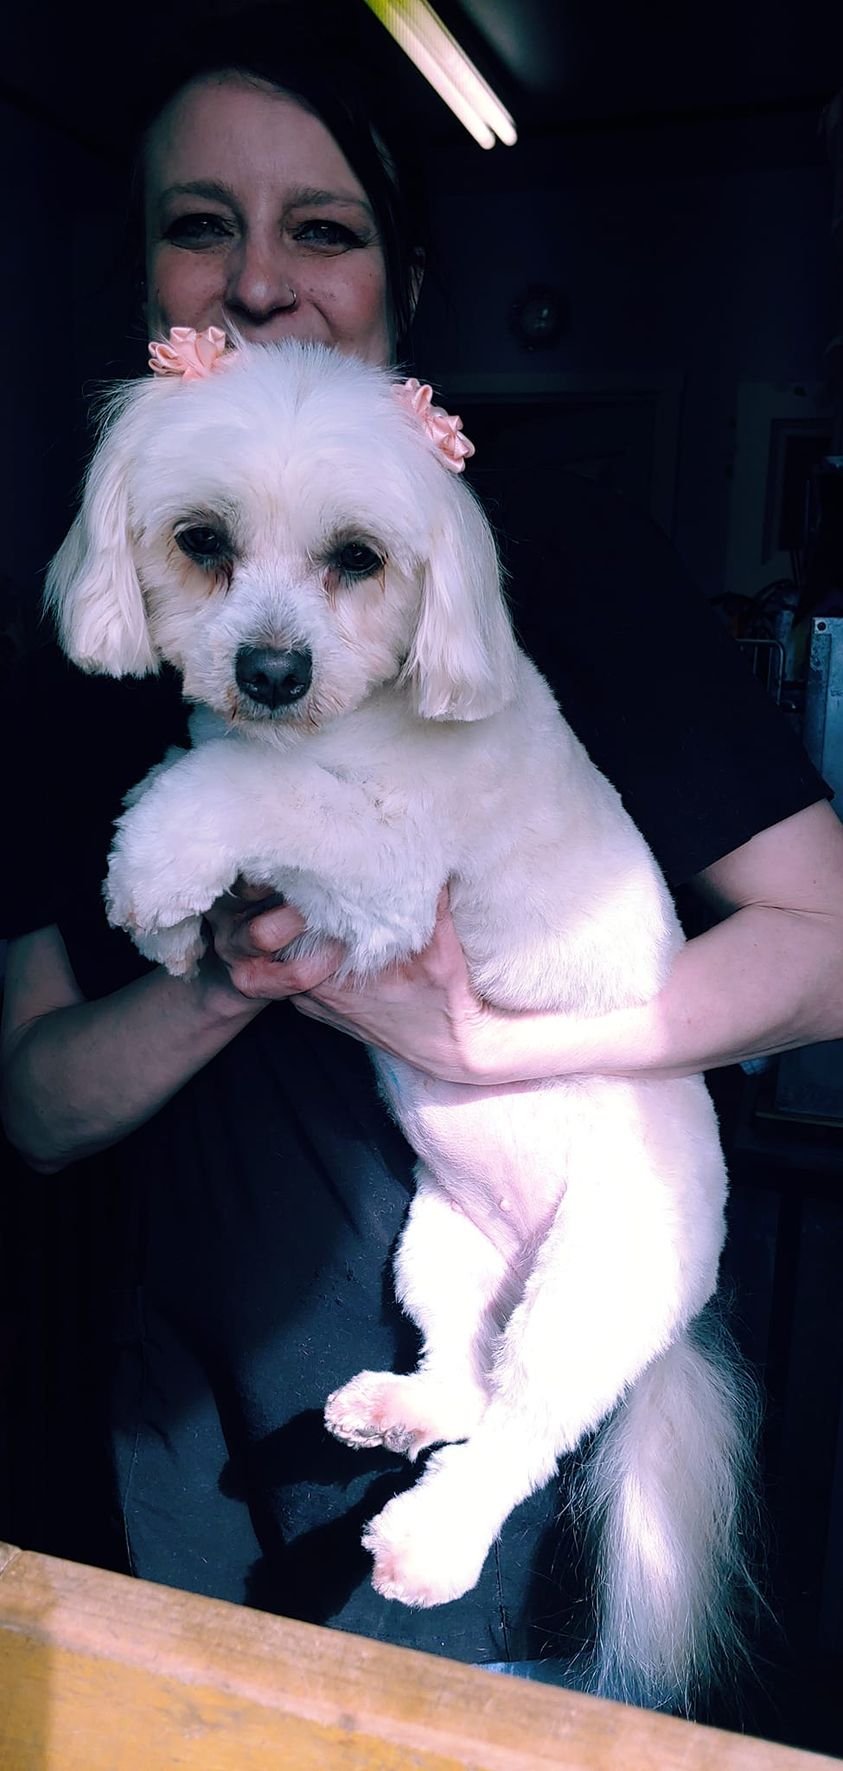 adoptable Dog in Arlington, WA named Reba, a young Maltese-Poodle girl